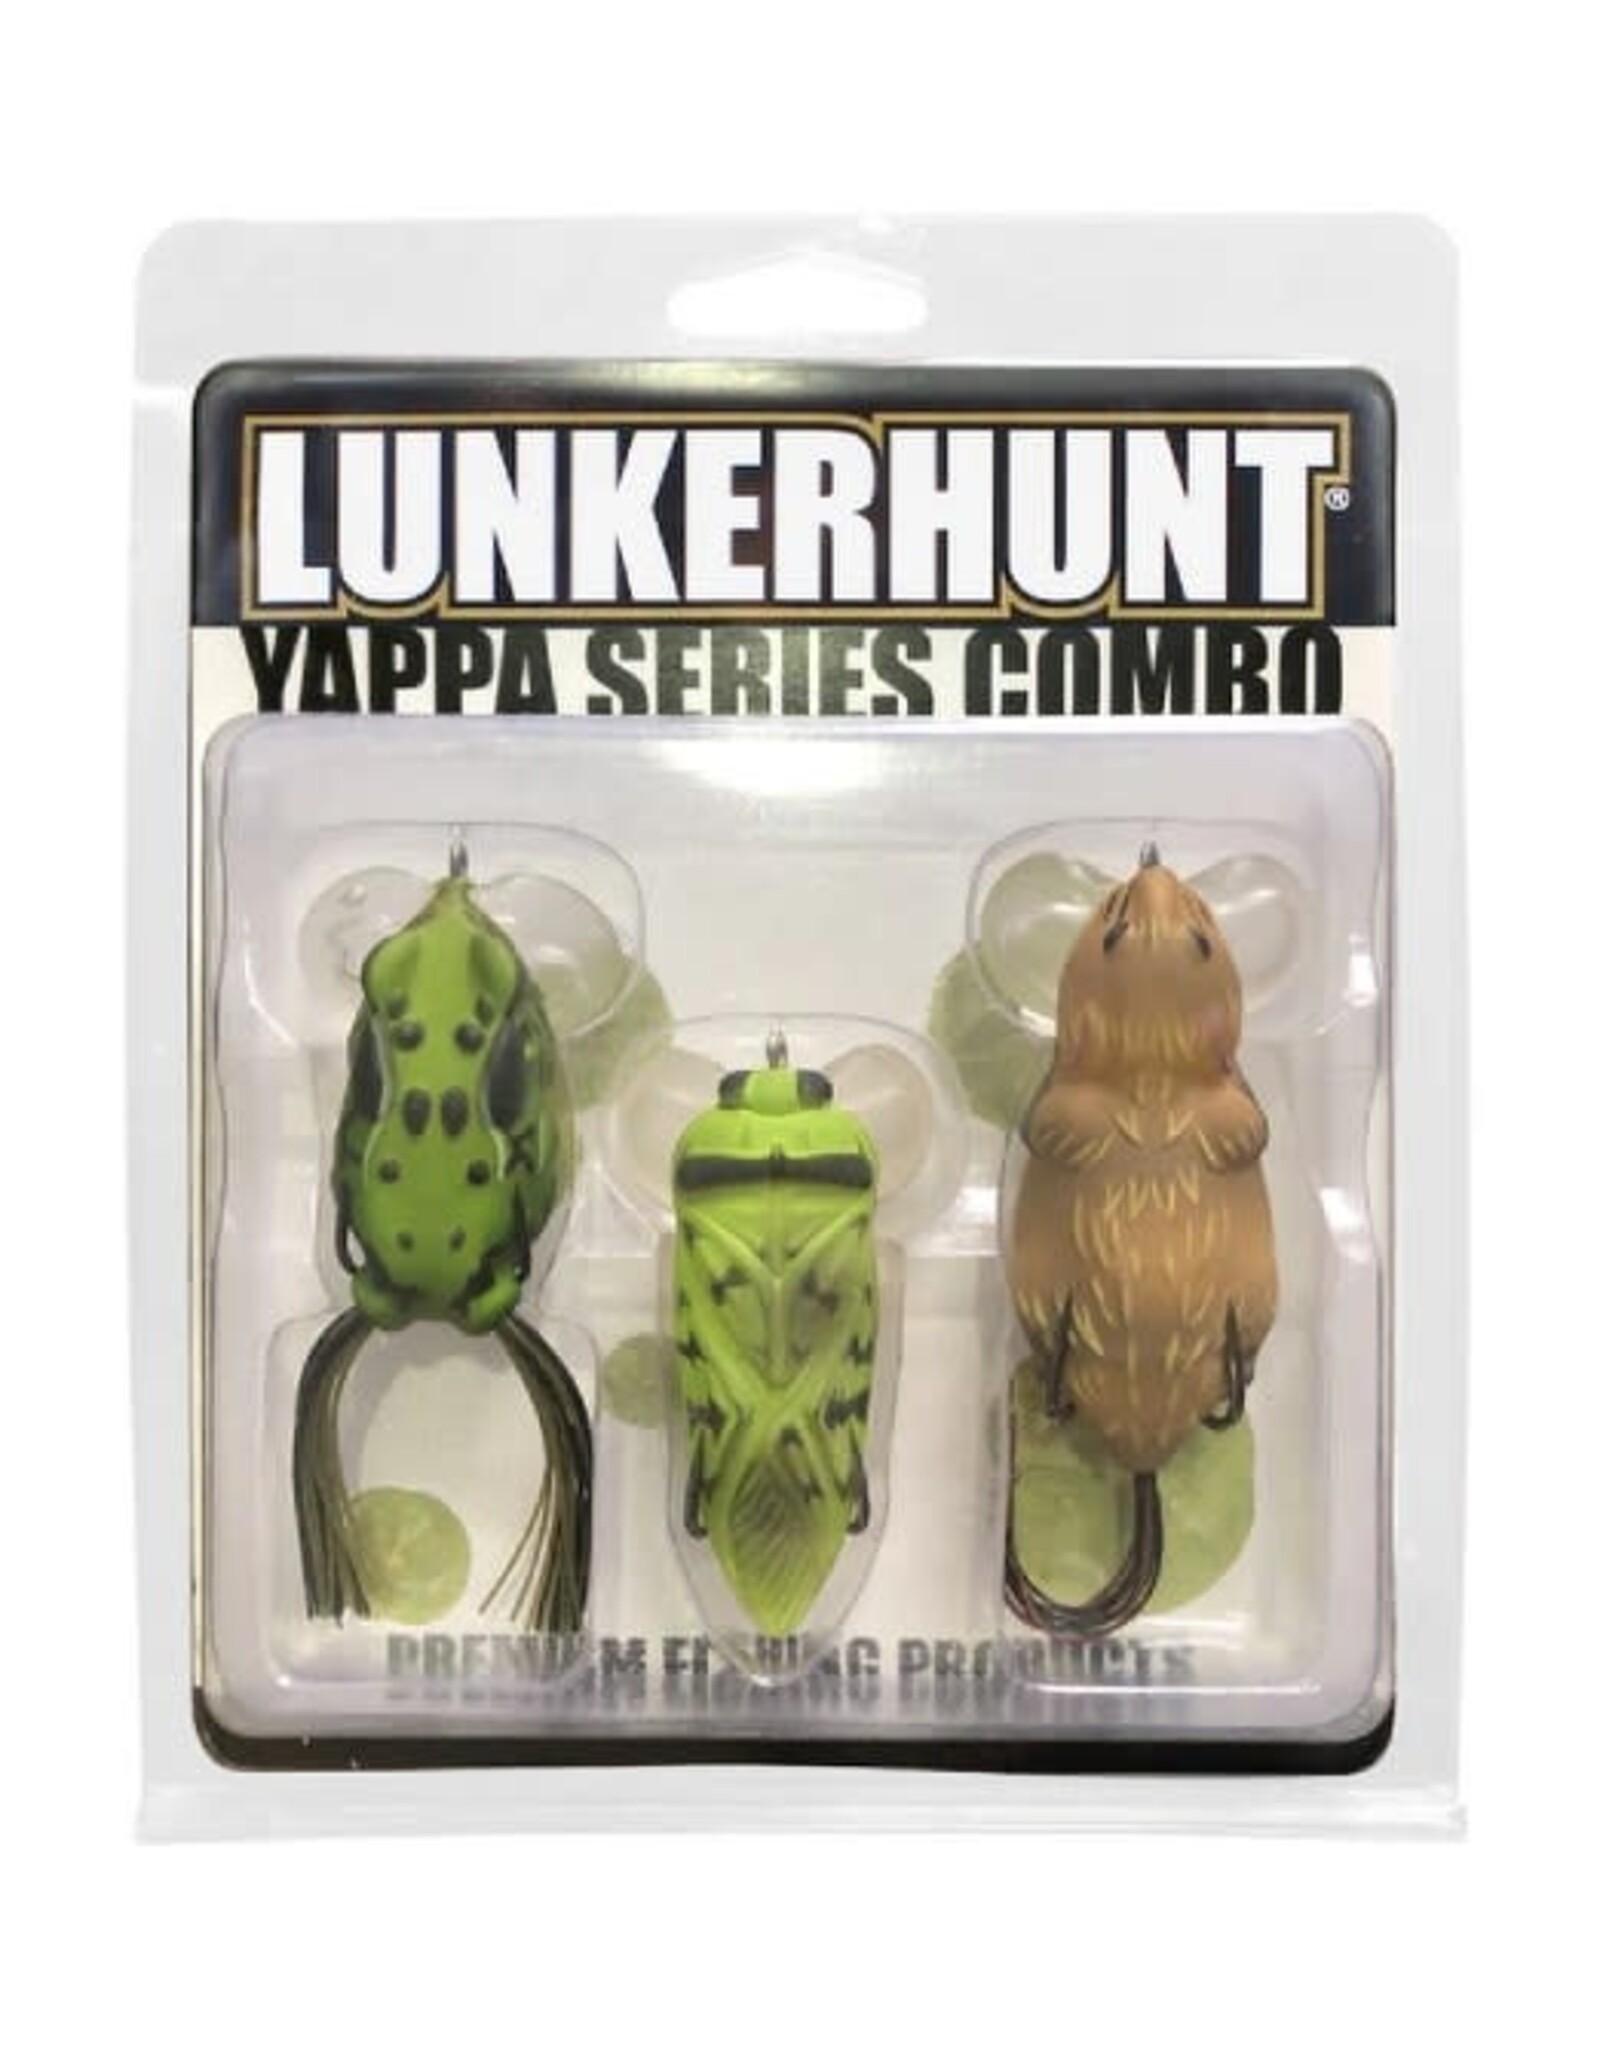 Lunkerhunt Yappa Series Combo - 3 Pack